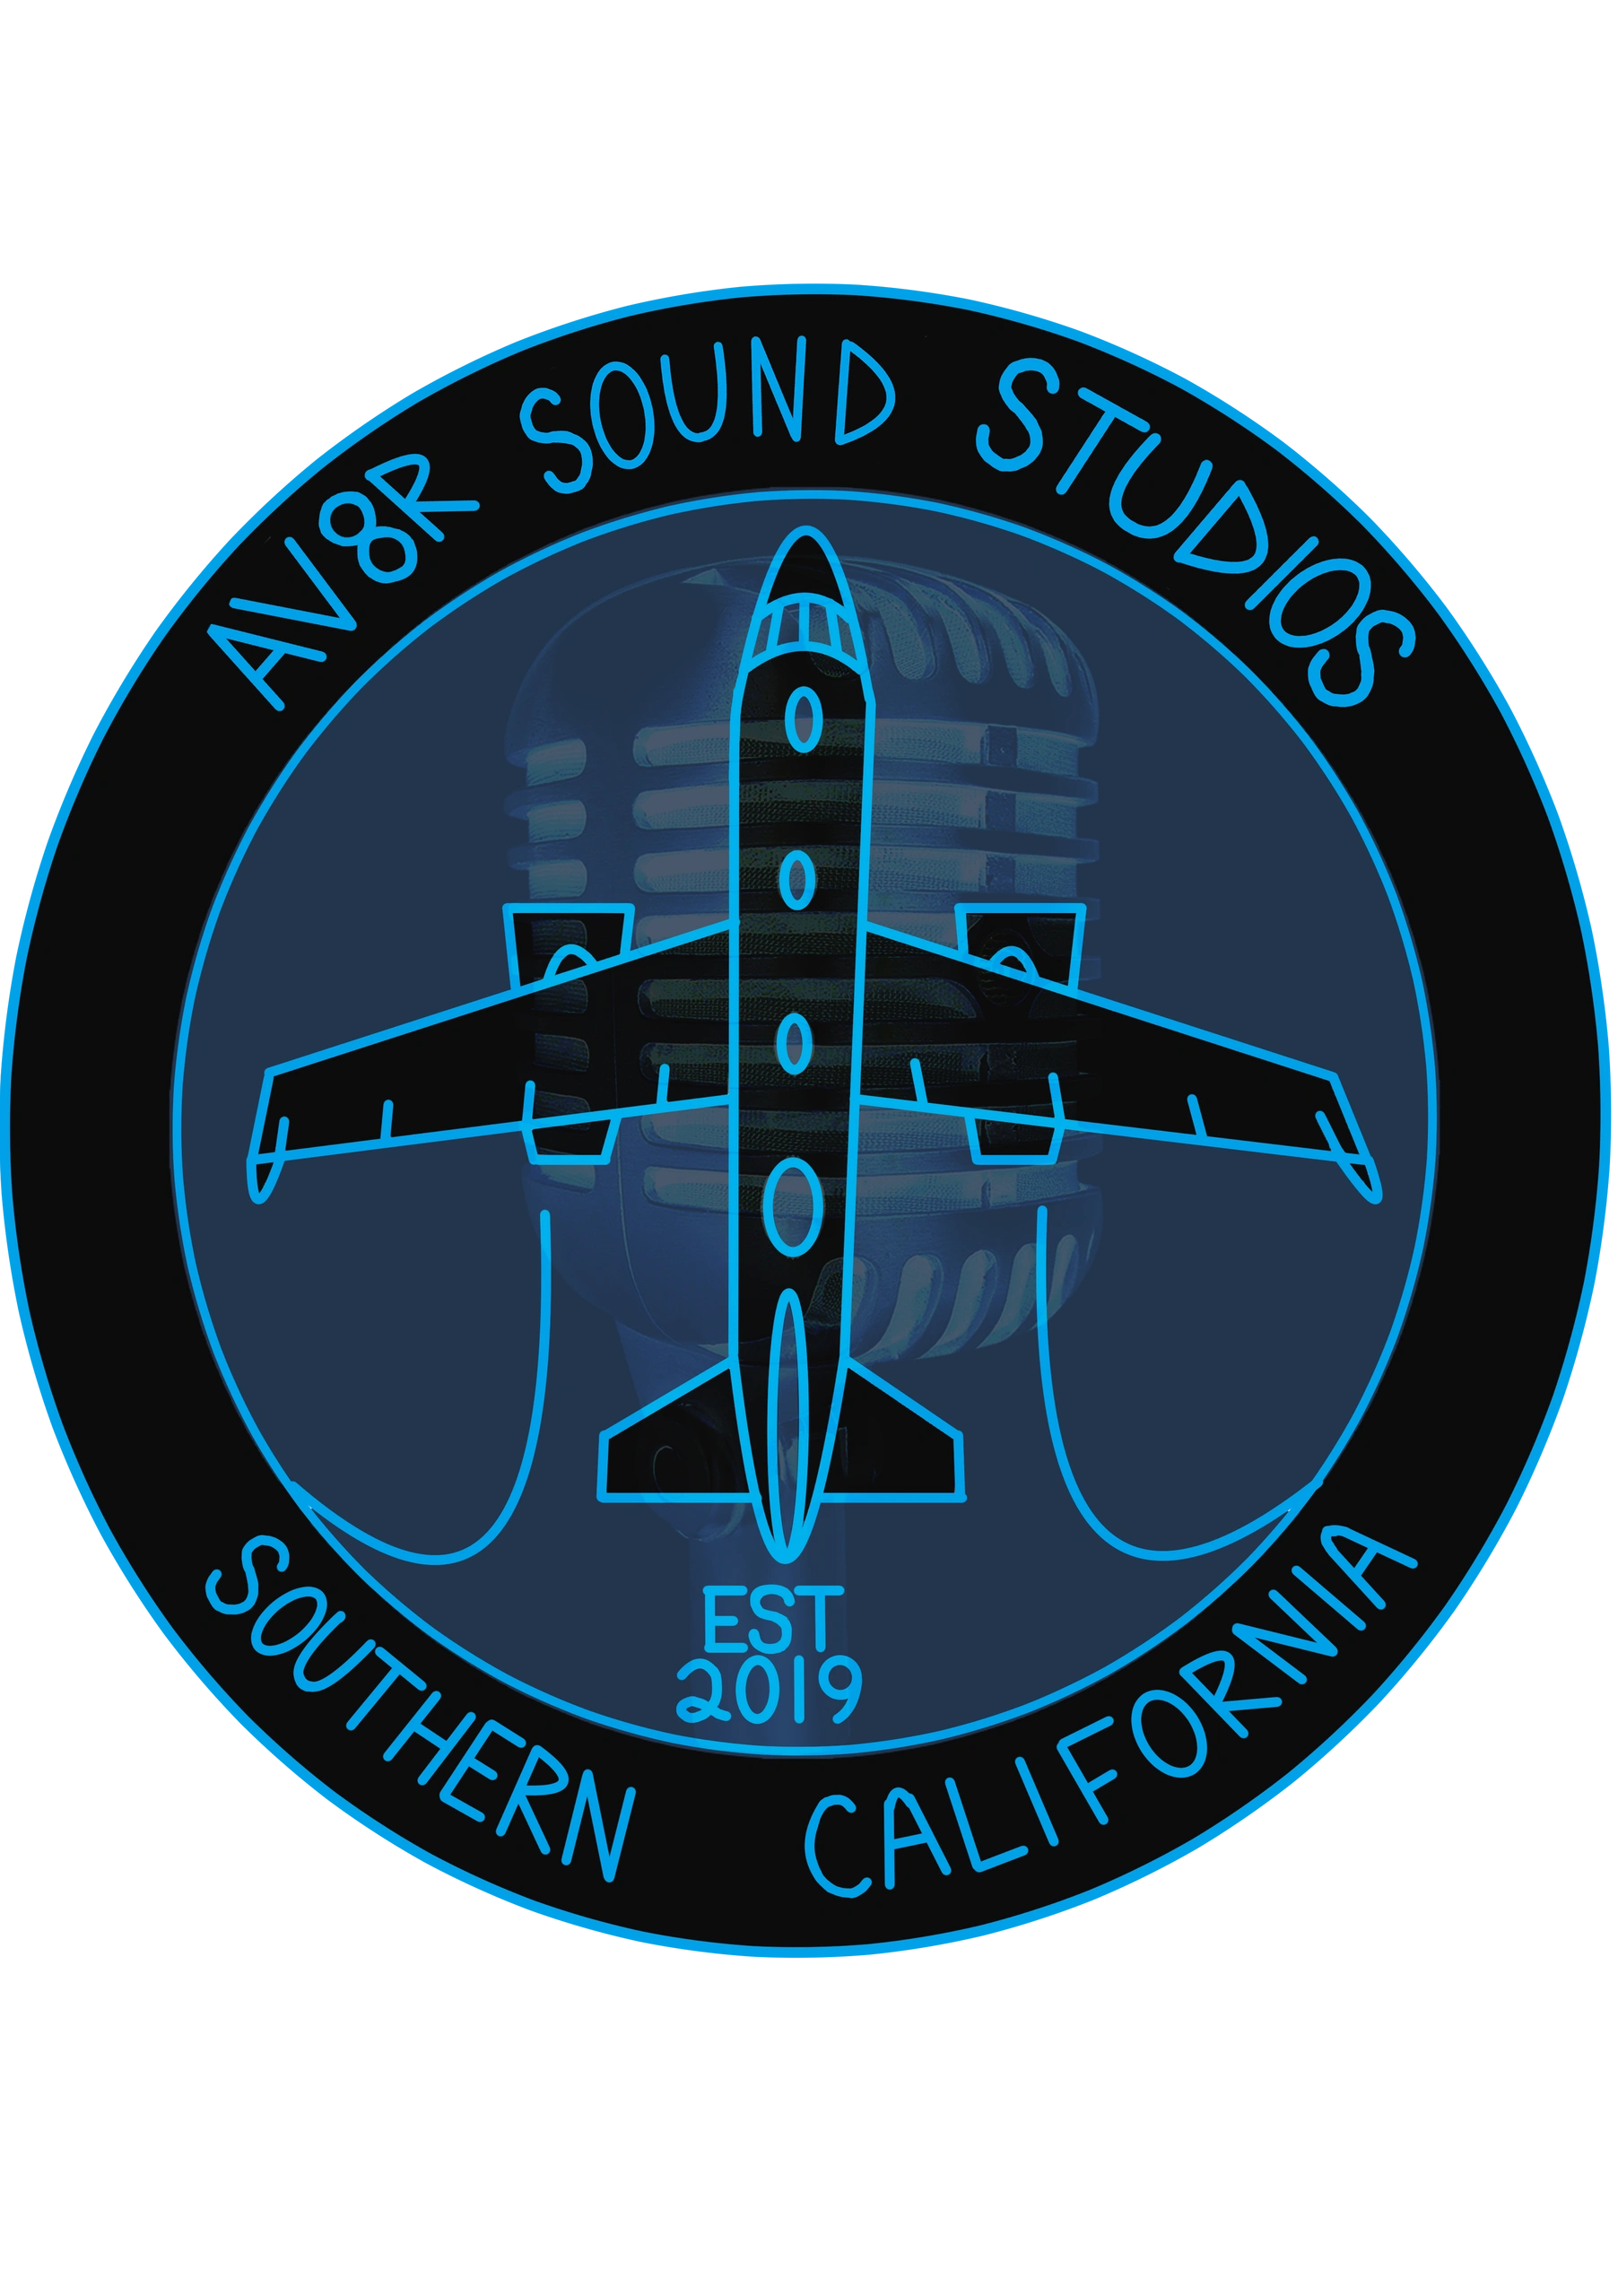 Av8r Sound Studios logo
Illustrated by Mia Ciaravella